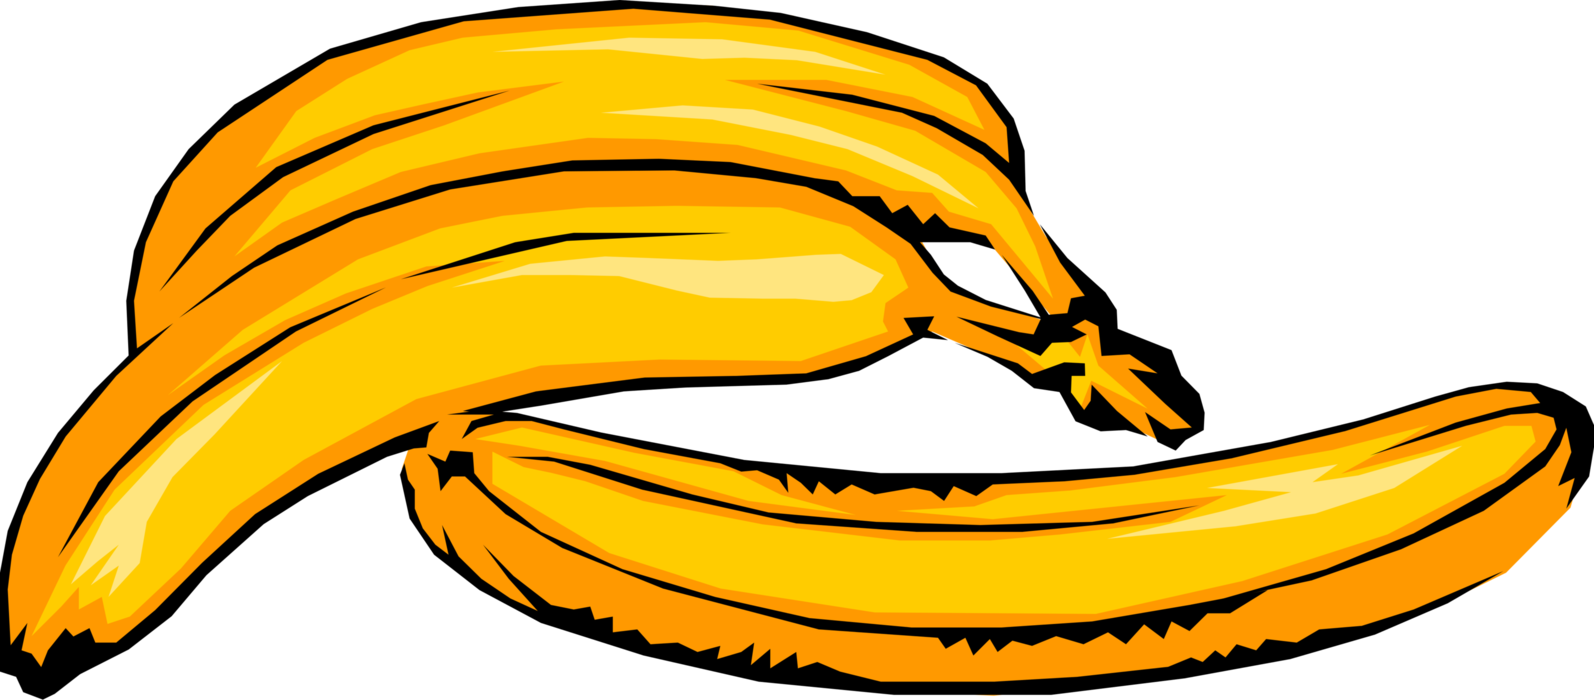 Vector Illustration of Three Edible Fruit Bananas